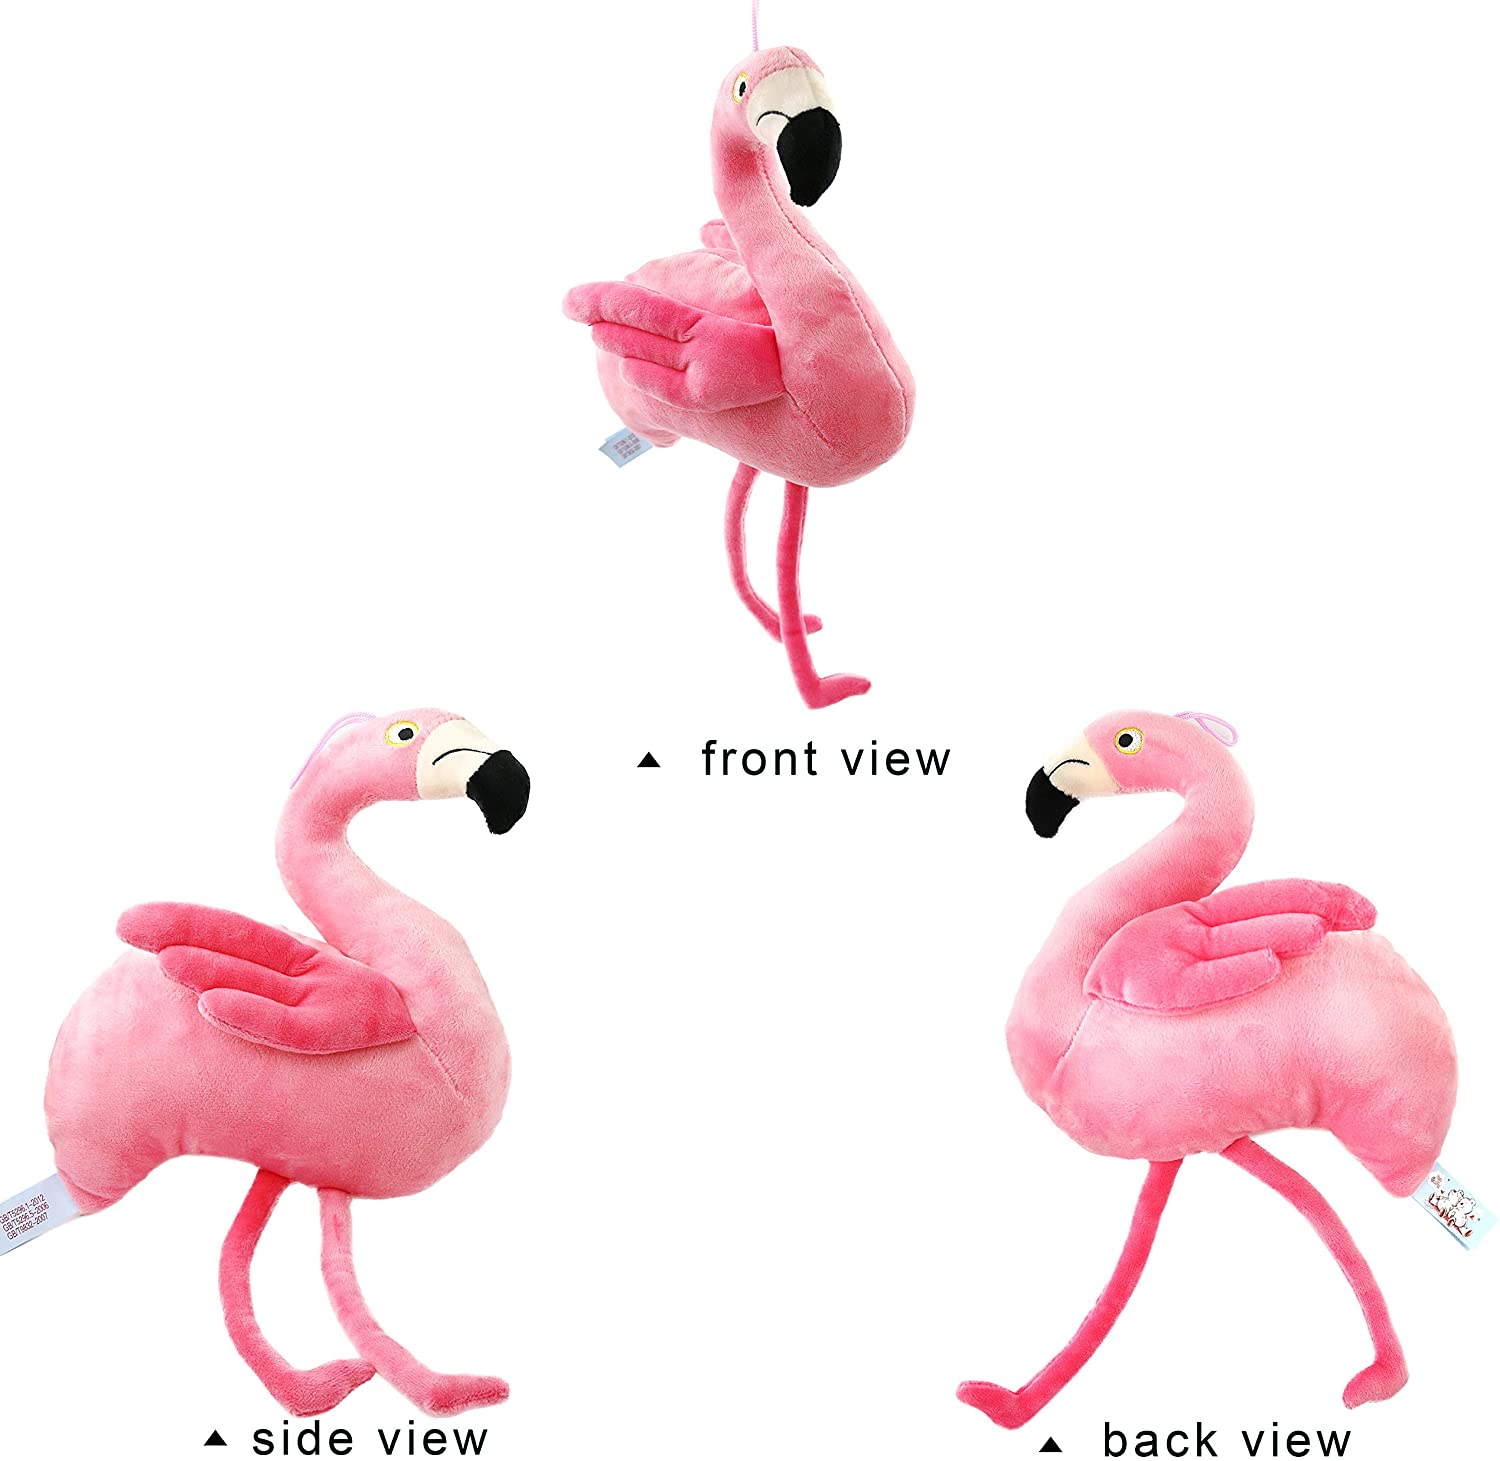 Houwsbaby Pink Flamingo Stuffed Animal Plush Toy Gift for Kids Boys Girls Holiday Christmas (Medium)